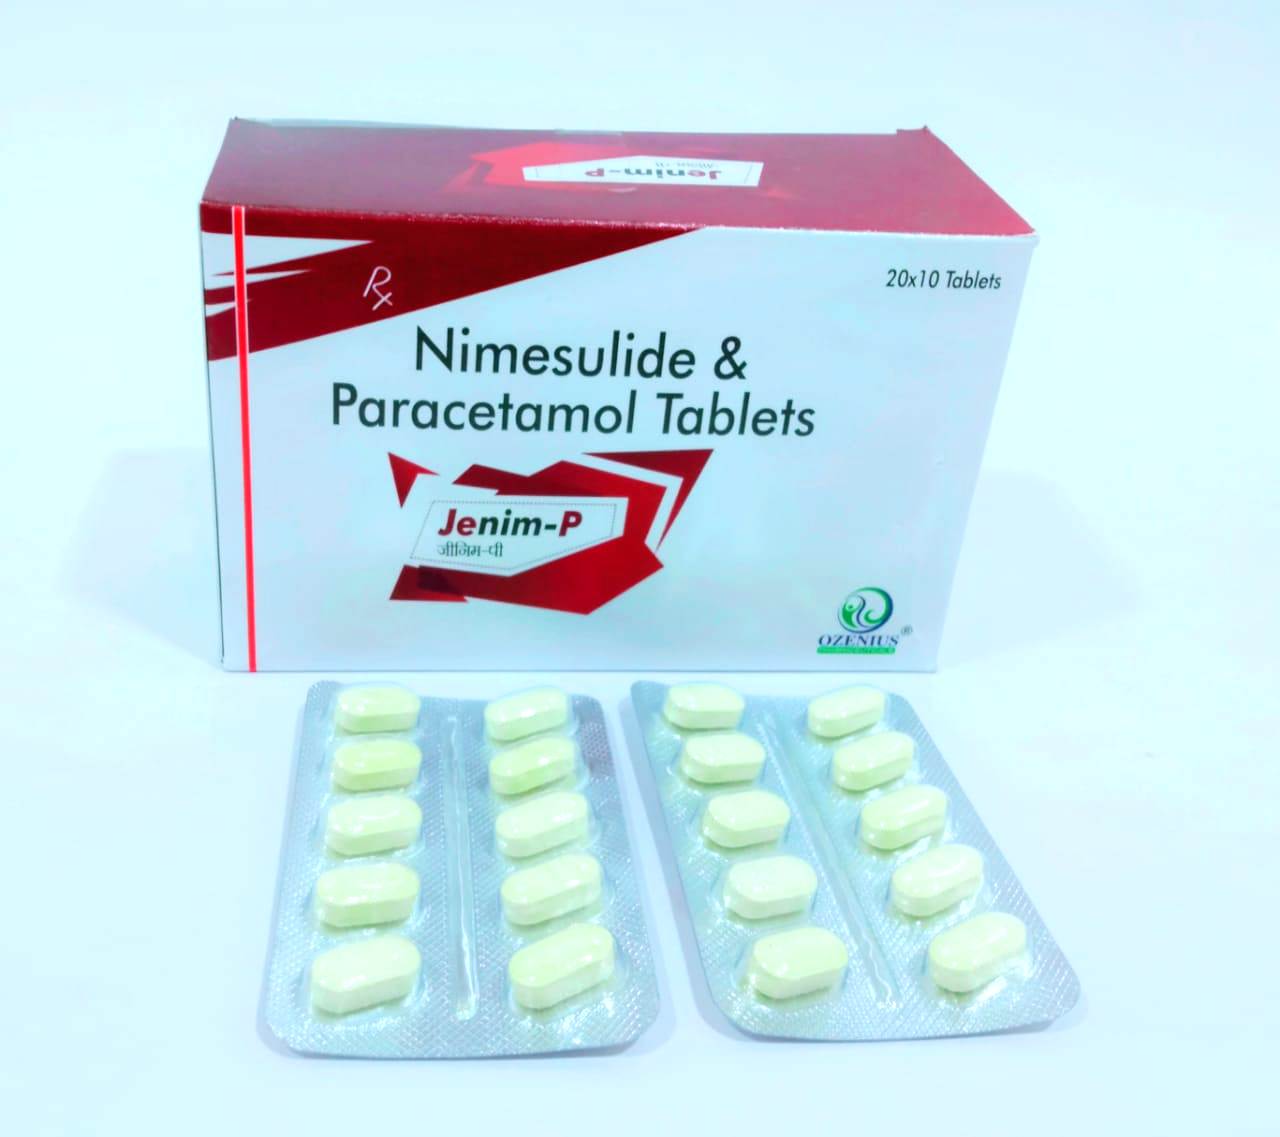 Product Name: JENIM P, Compositions of JENIM P are Nimesulide & Paracetamol Tablets - Ozenius Pharmaceutials